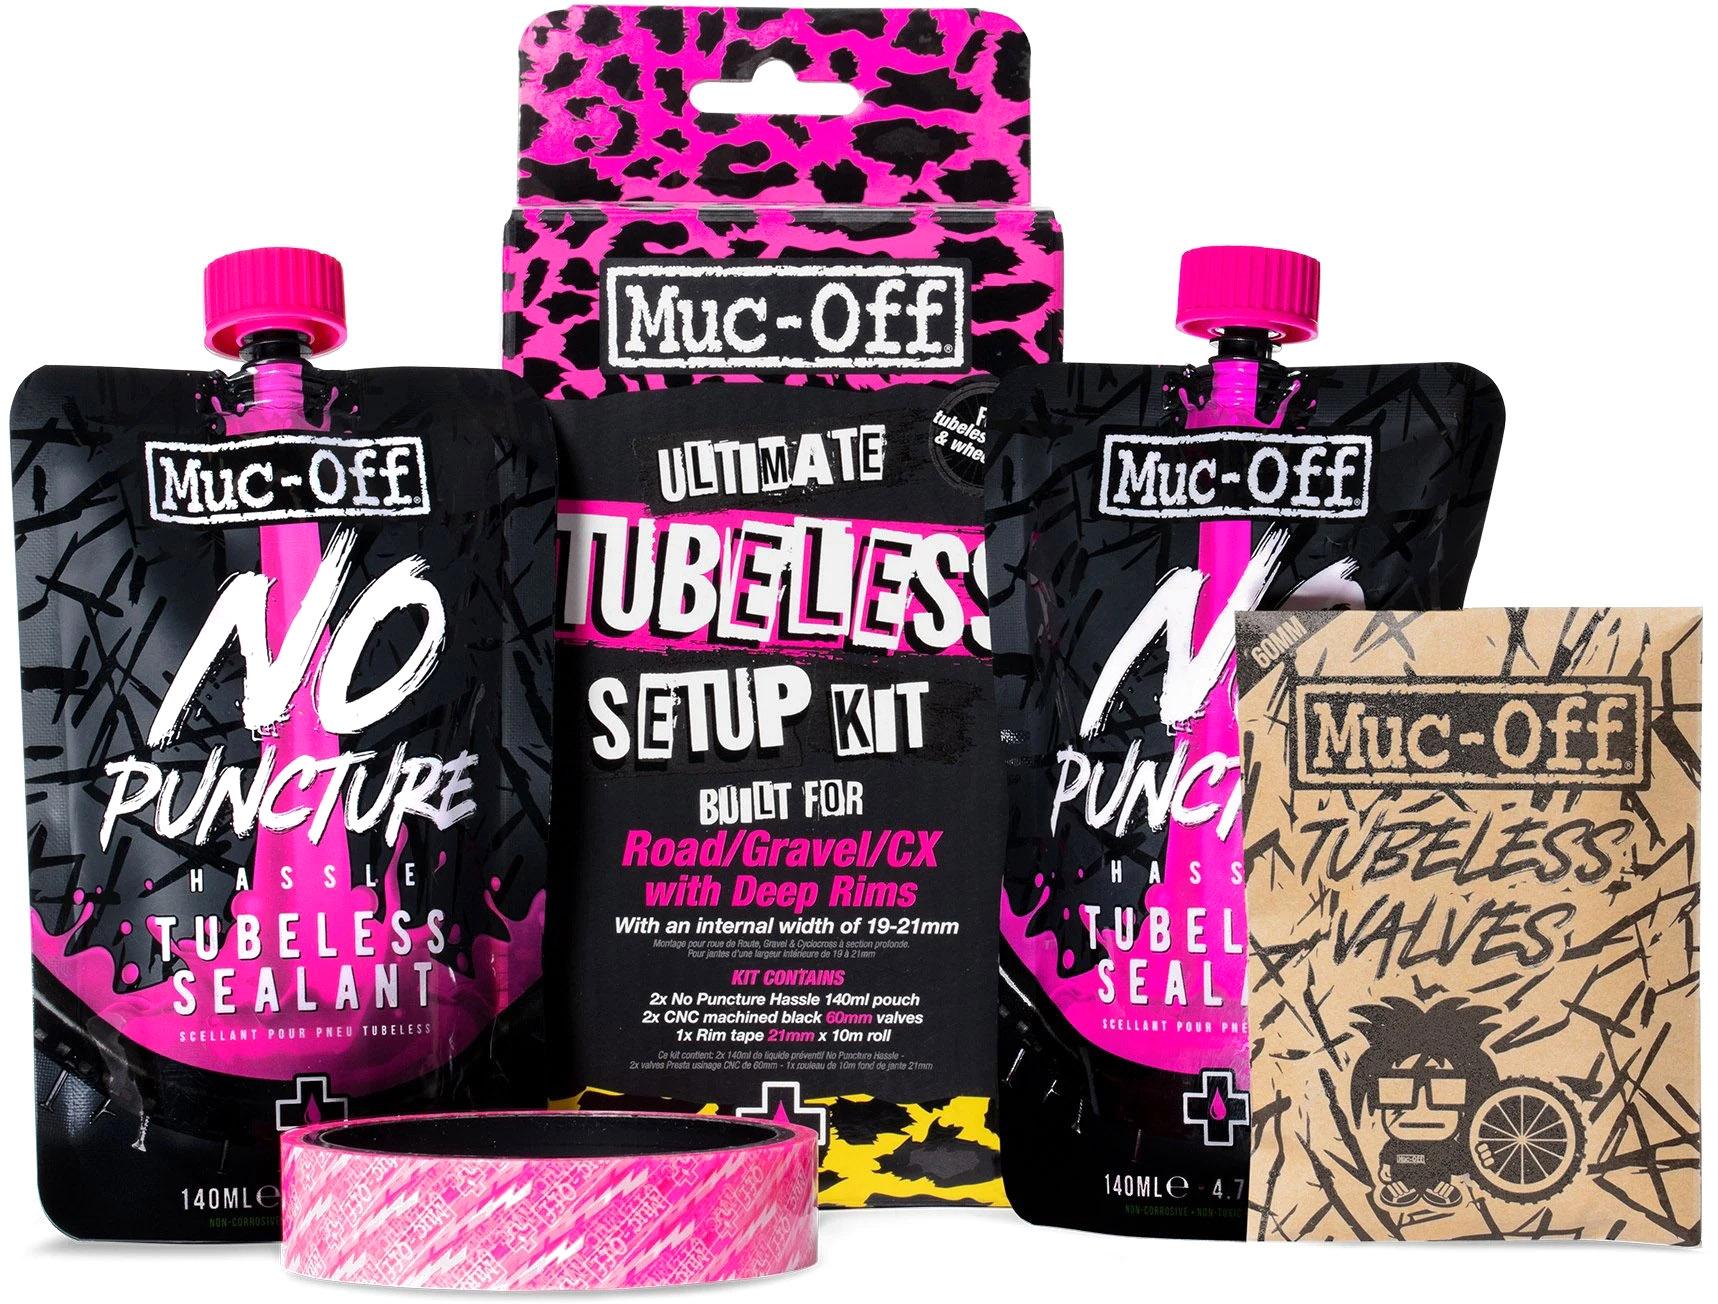 Muc-off Ultimate Tubeless Setup Kit - Road - Black/pink